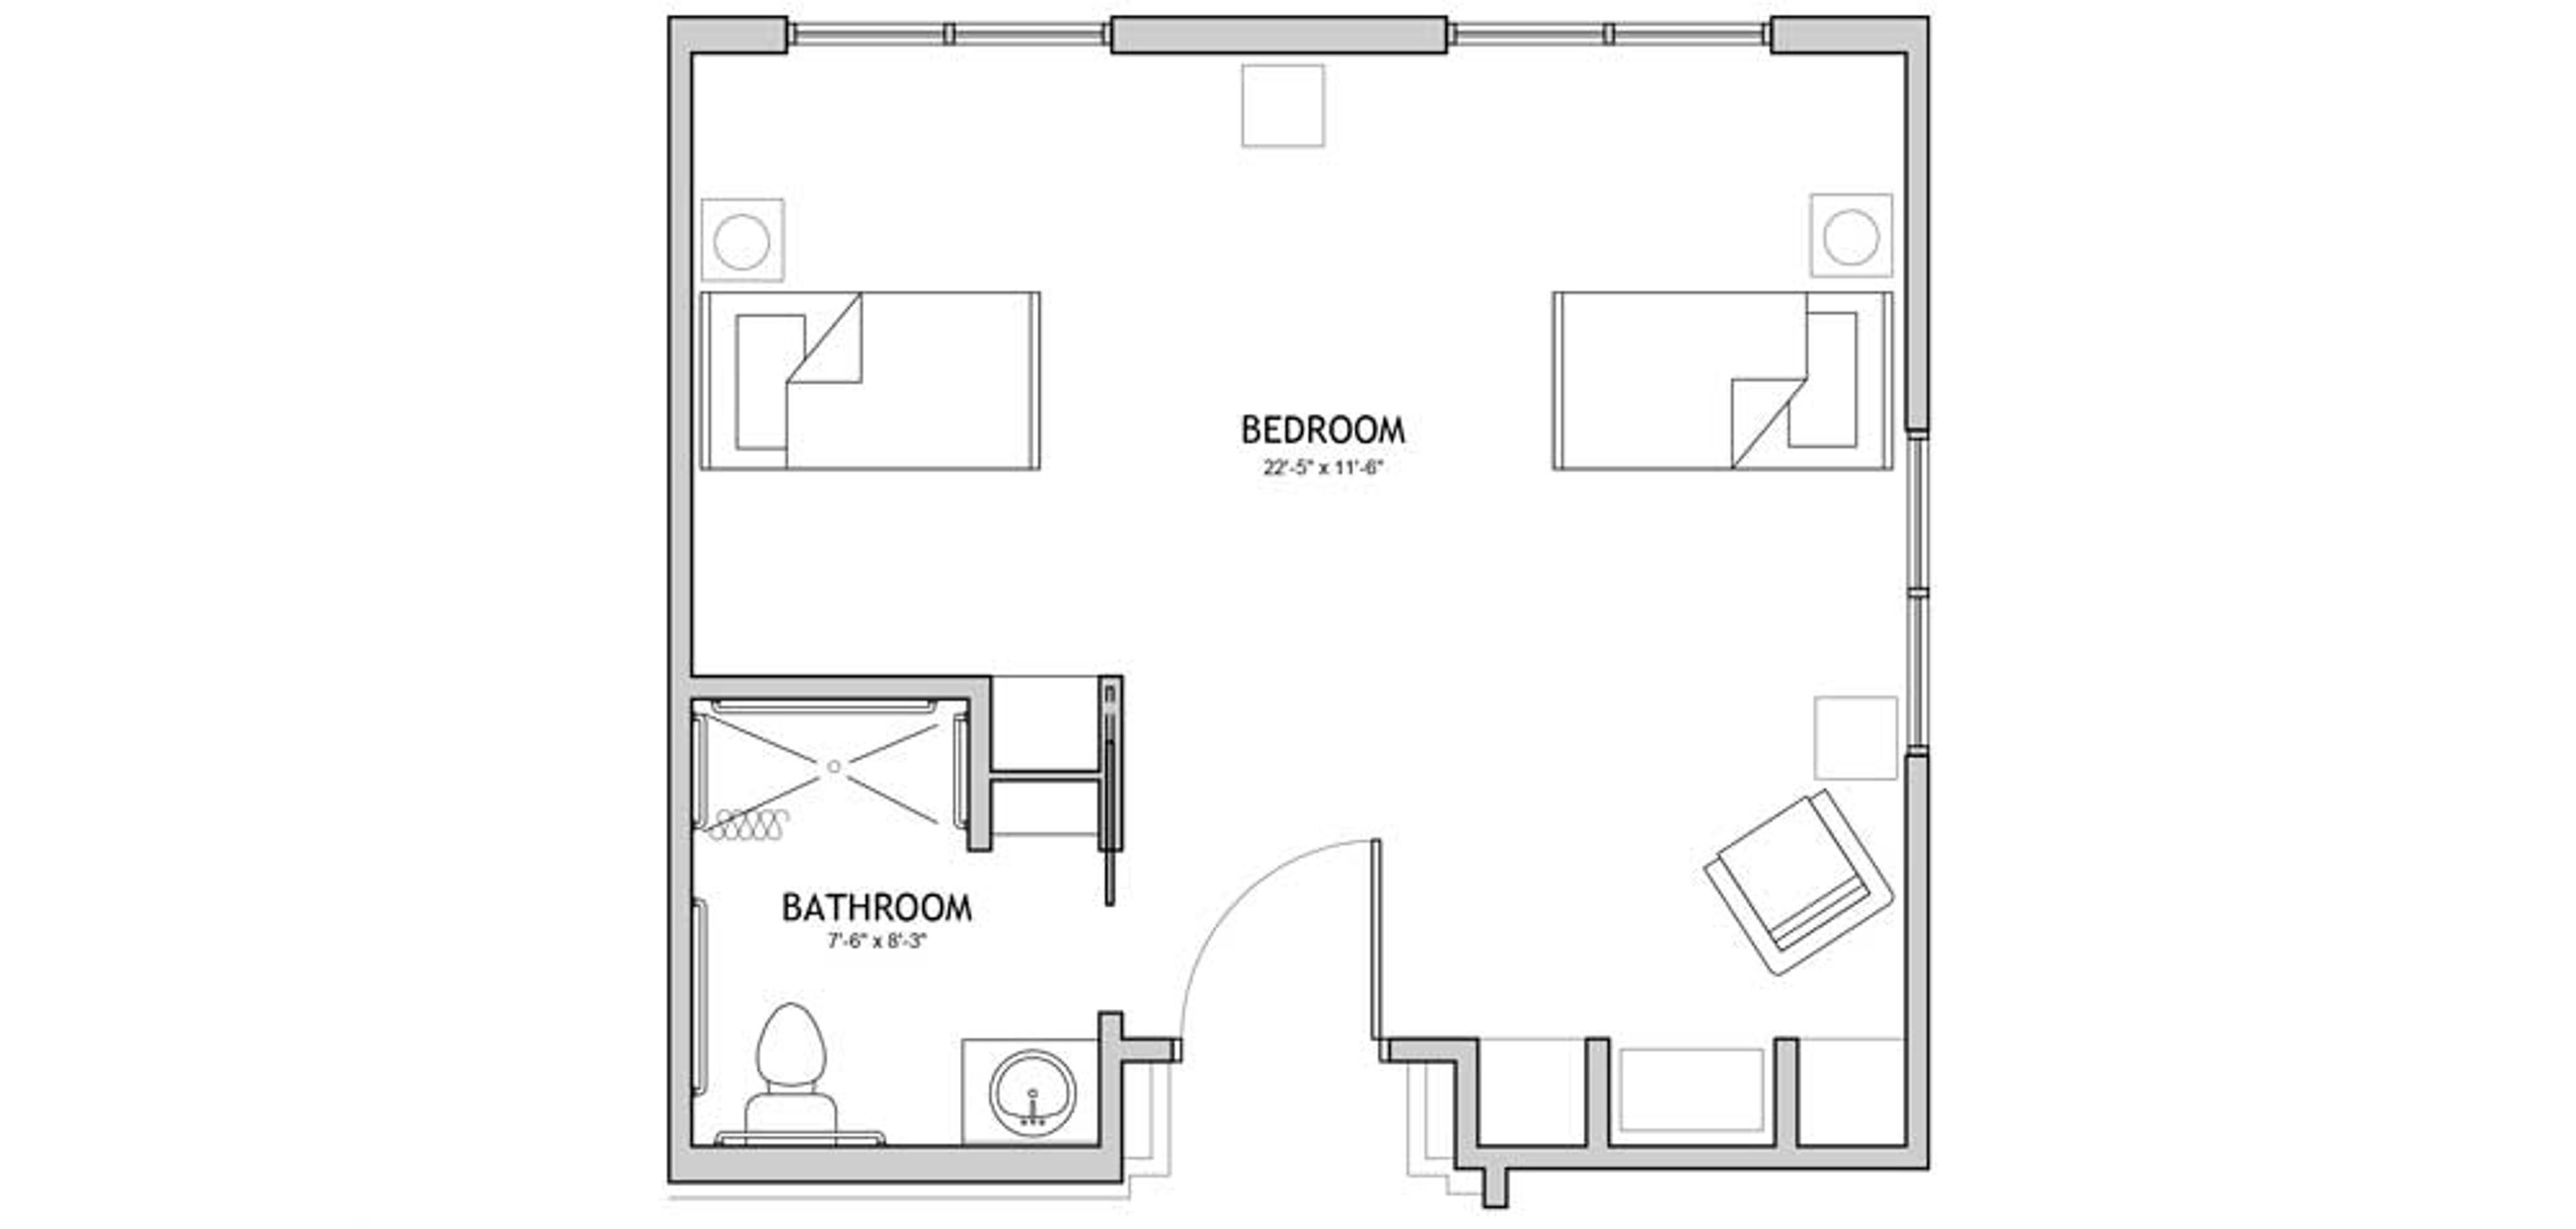 Floorplan - The Auberge at Onion Creek - 1 bed, 1 bath, 475 sq. ft. Memory Care